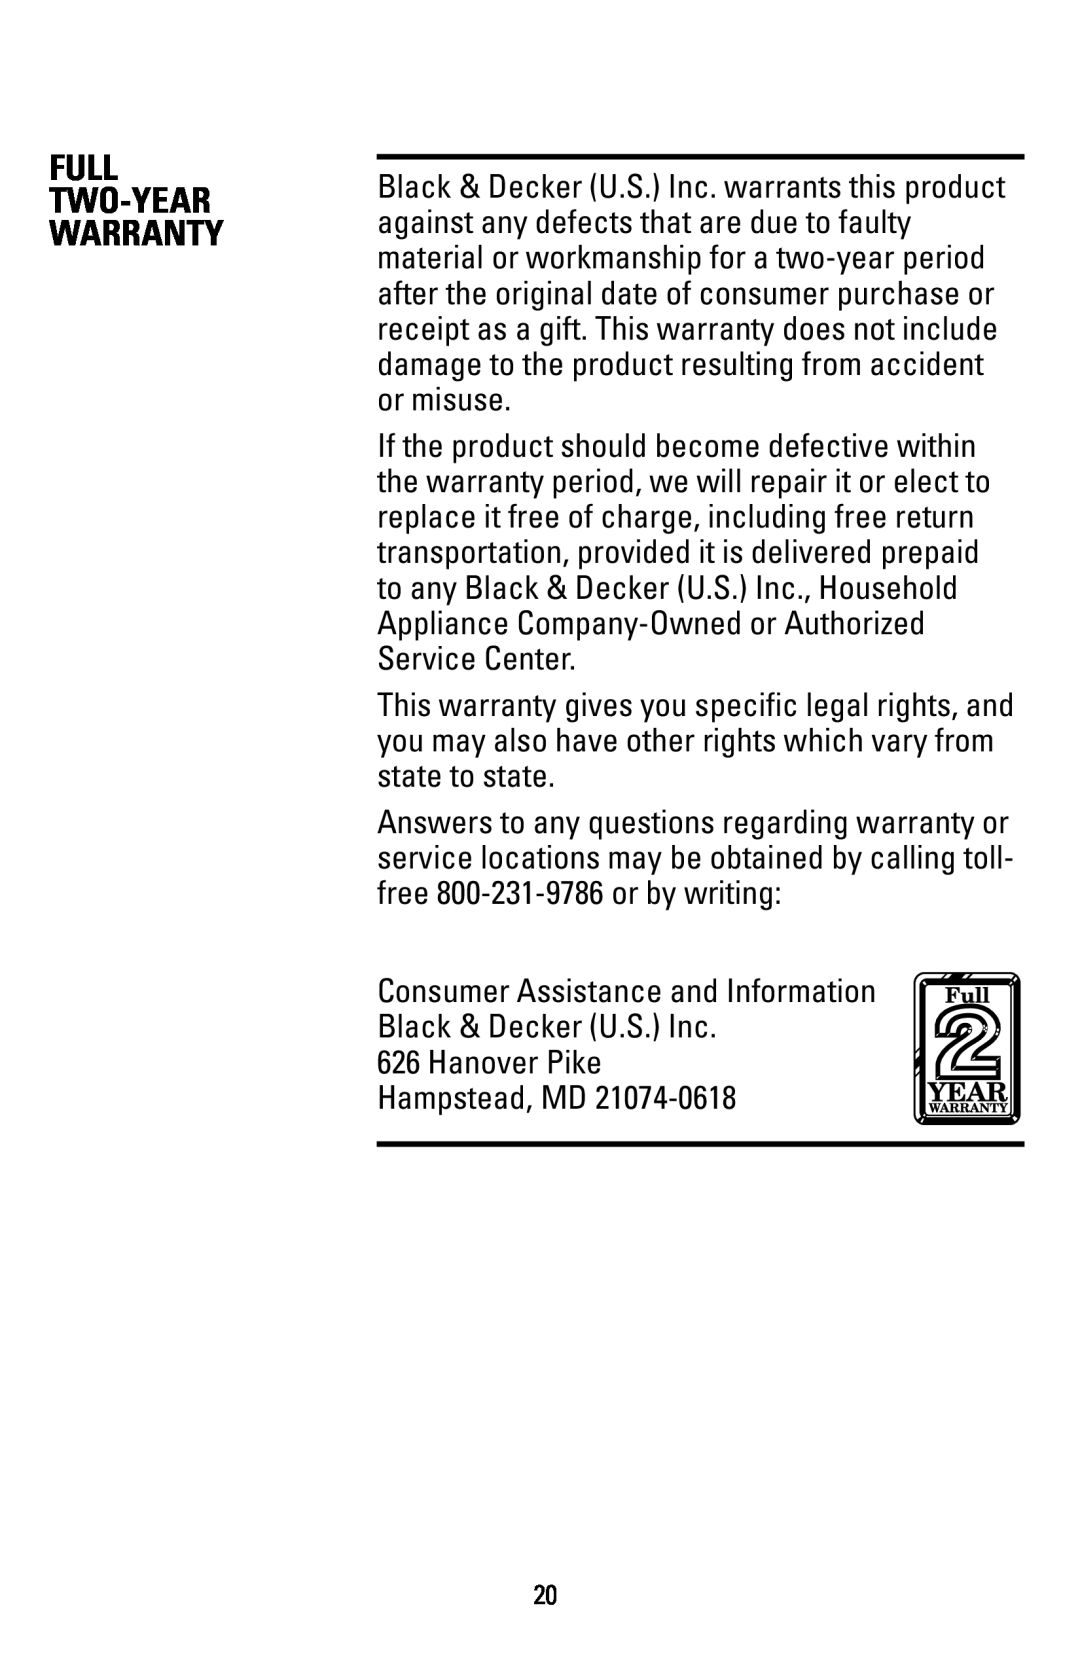 Black & Decker T1000 manual Consumer Assistance and Information Black & Decker U.S. Inc 